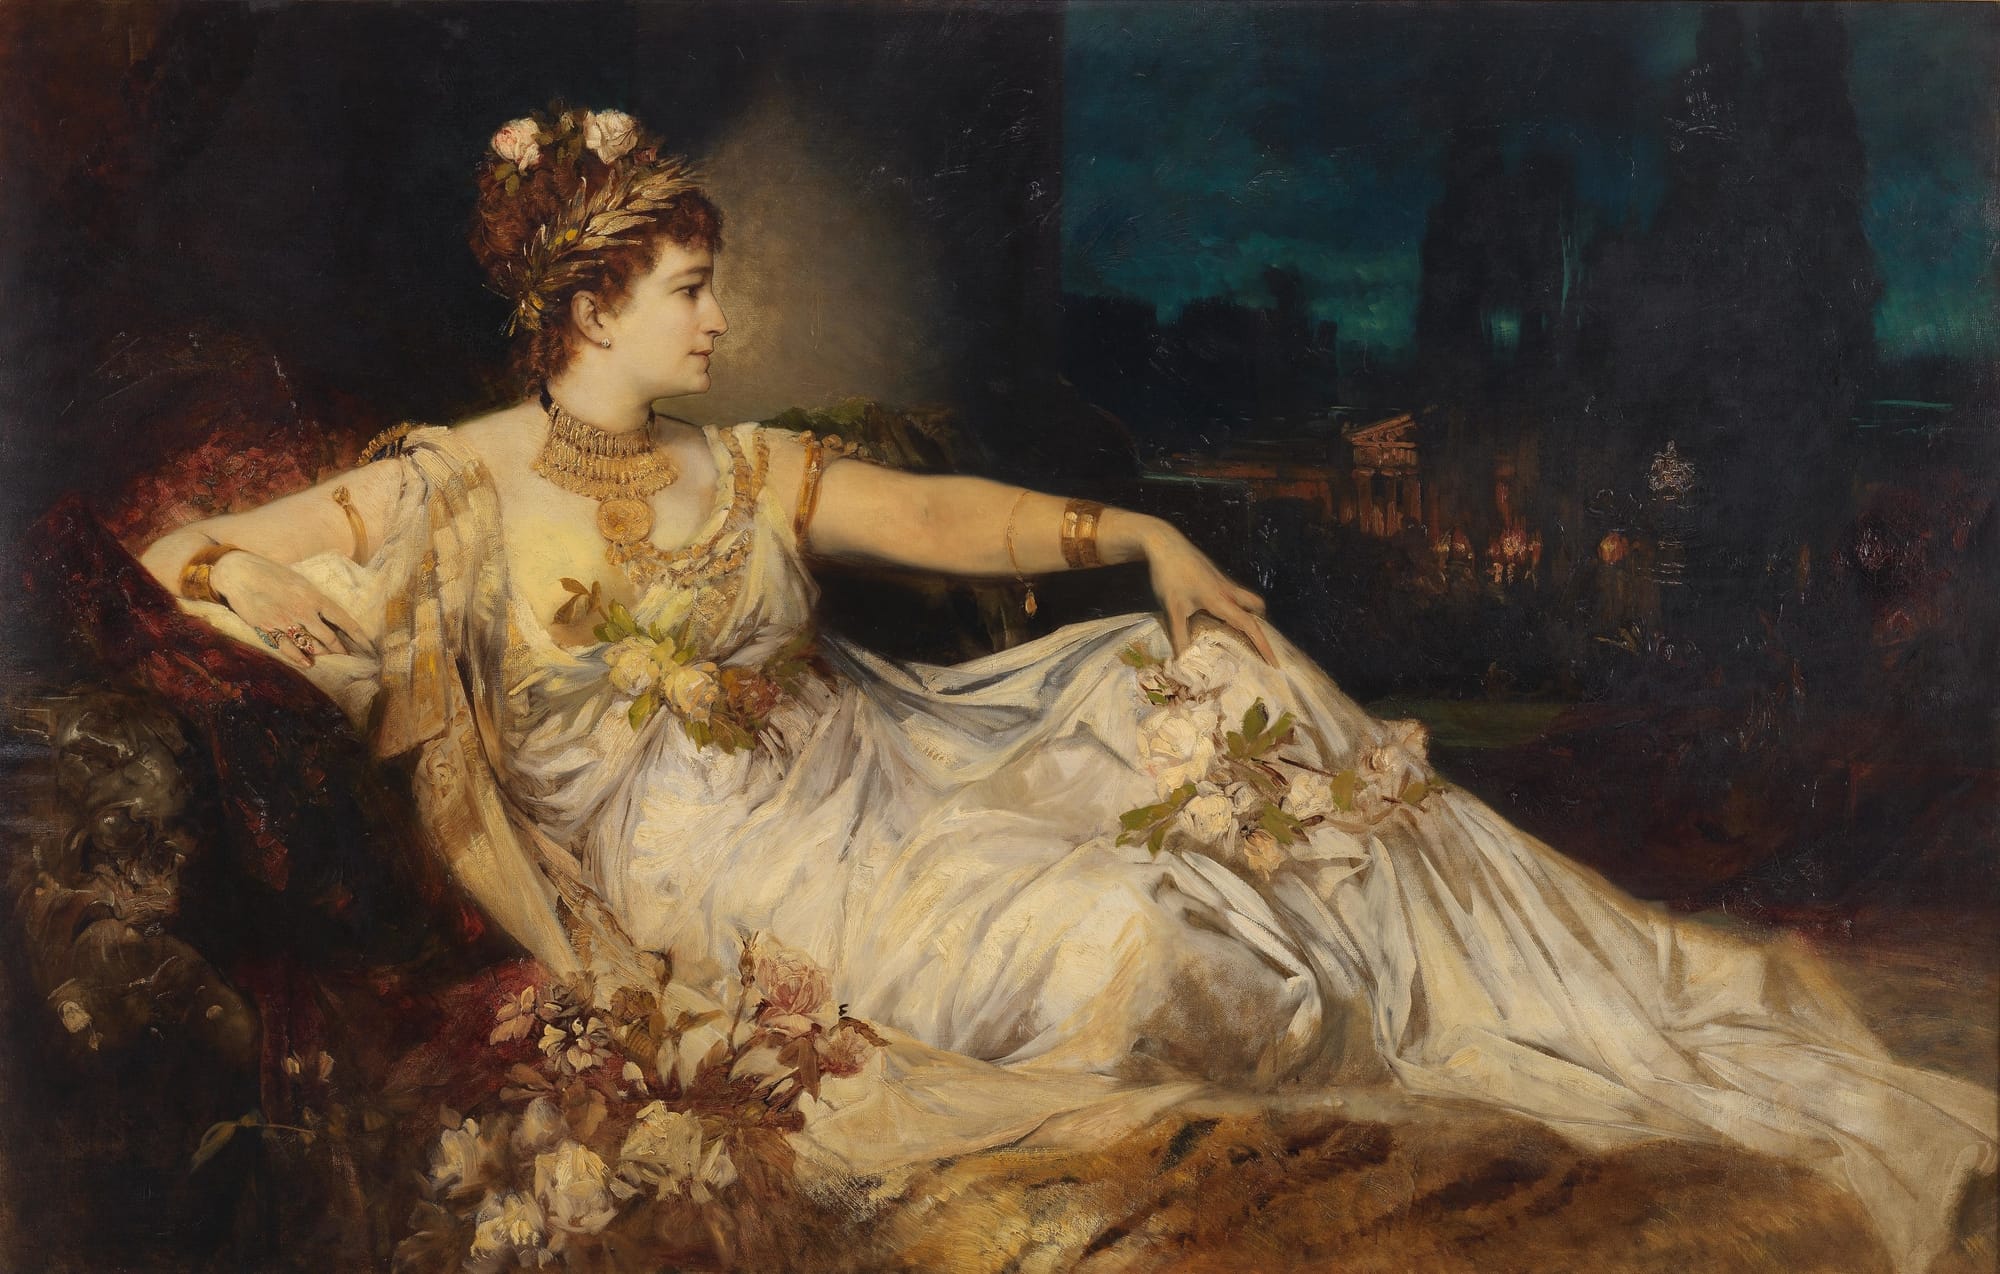  Charlotte Wolter in Adolf Wilbrandt's tragedy, Arria und Messalina (c. 1875), painting by Hans Makart